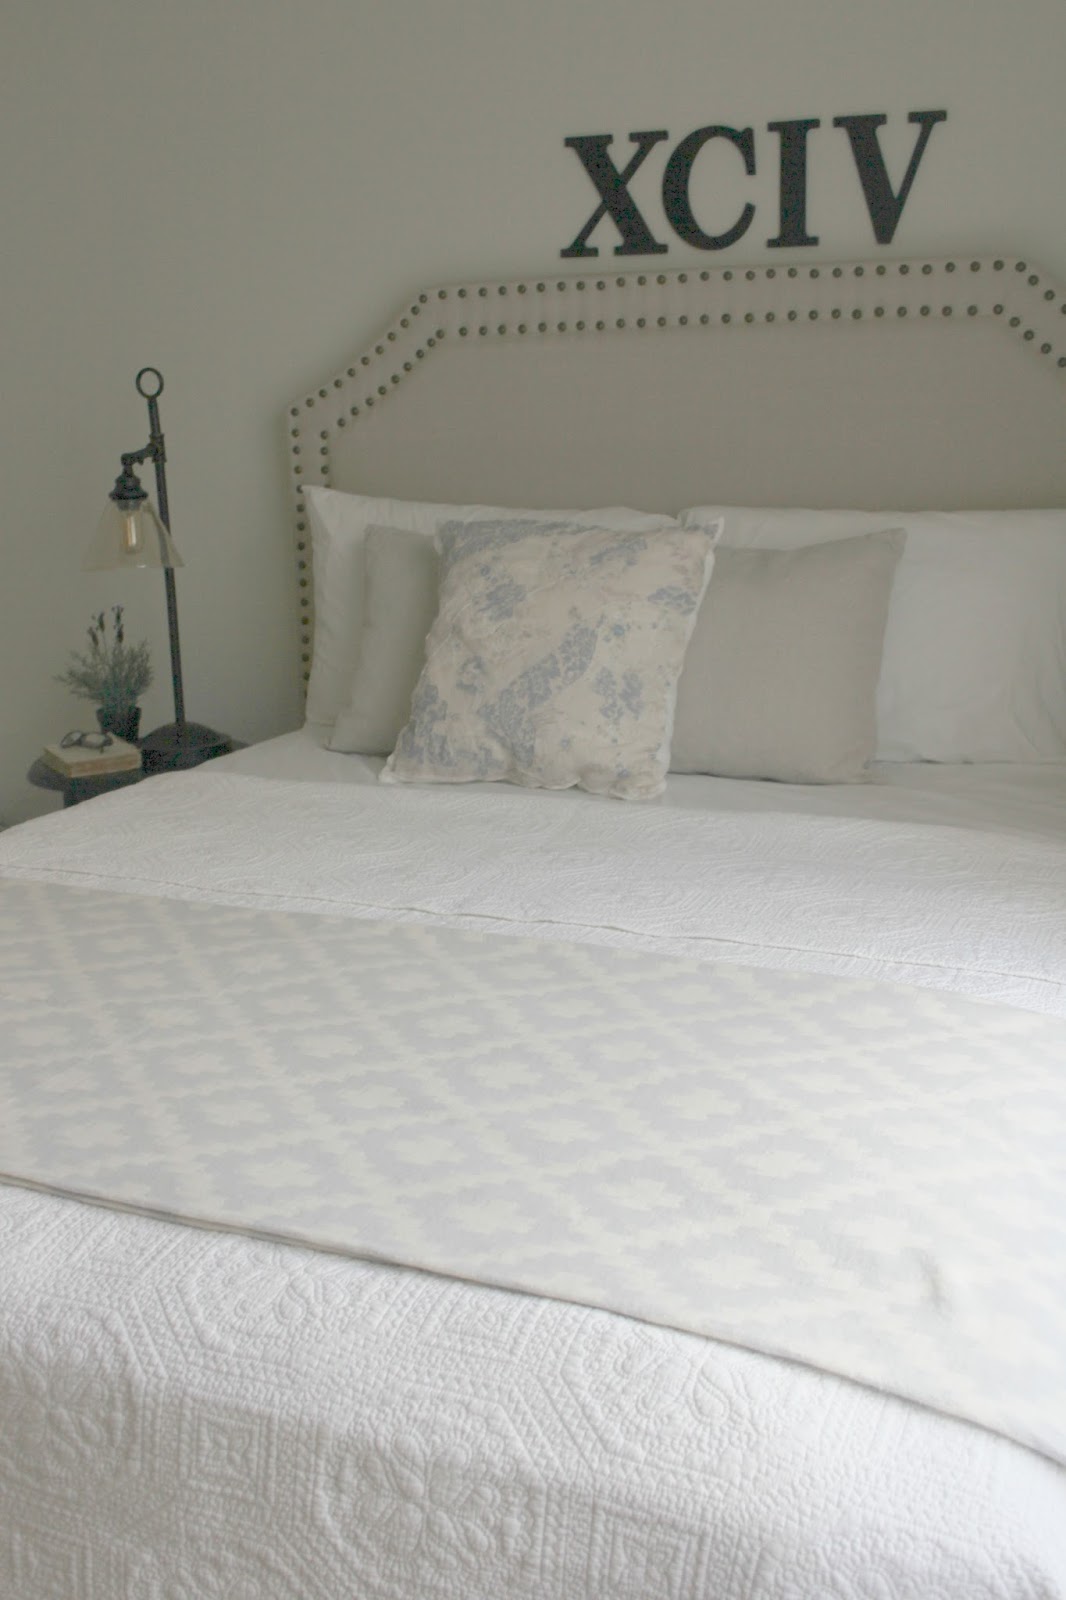 DIY bedroom decor makeover with serene, European inspired modern farmhouse style by Hello Lovely Studio